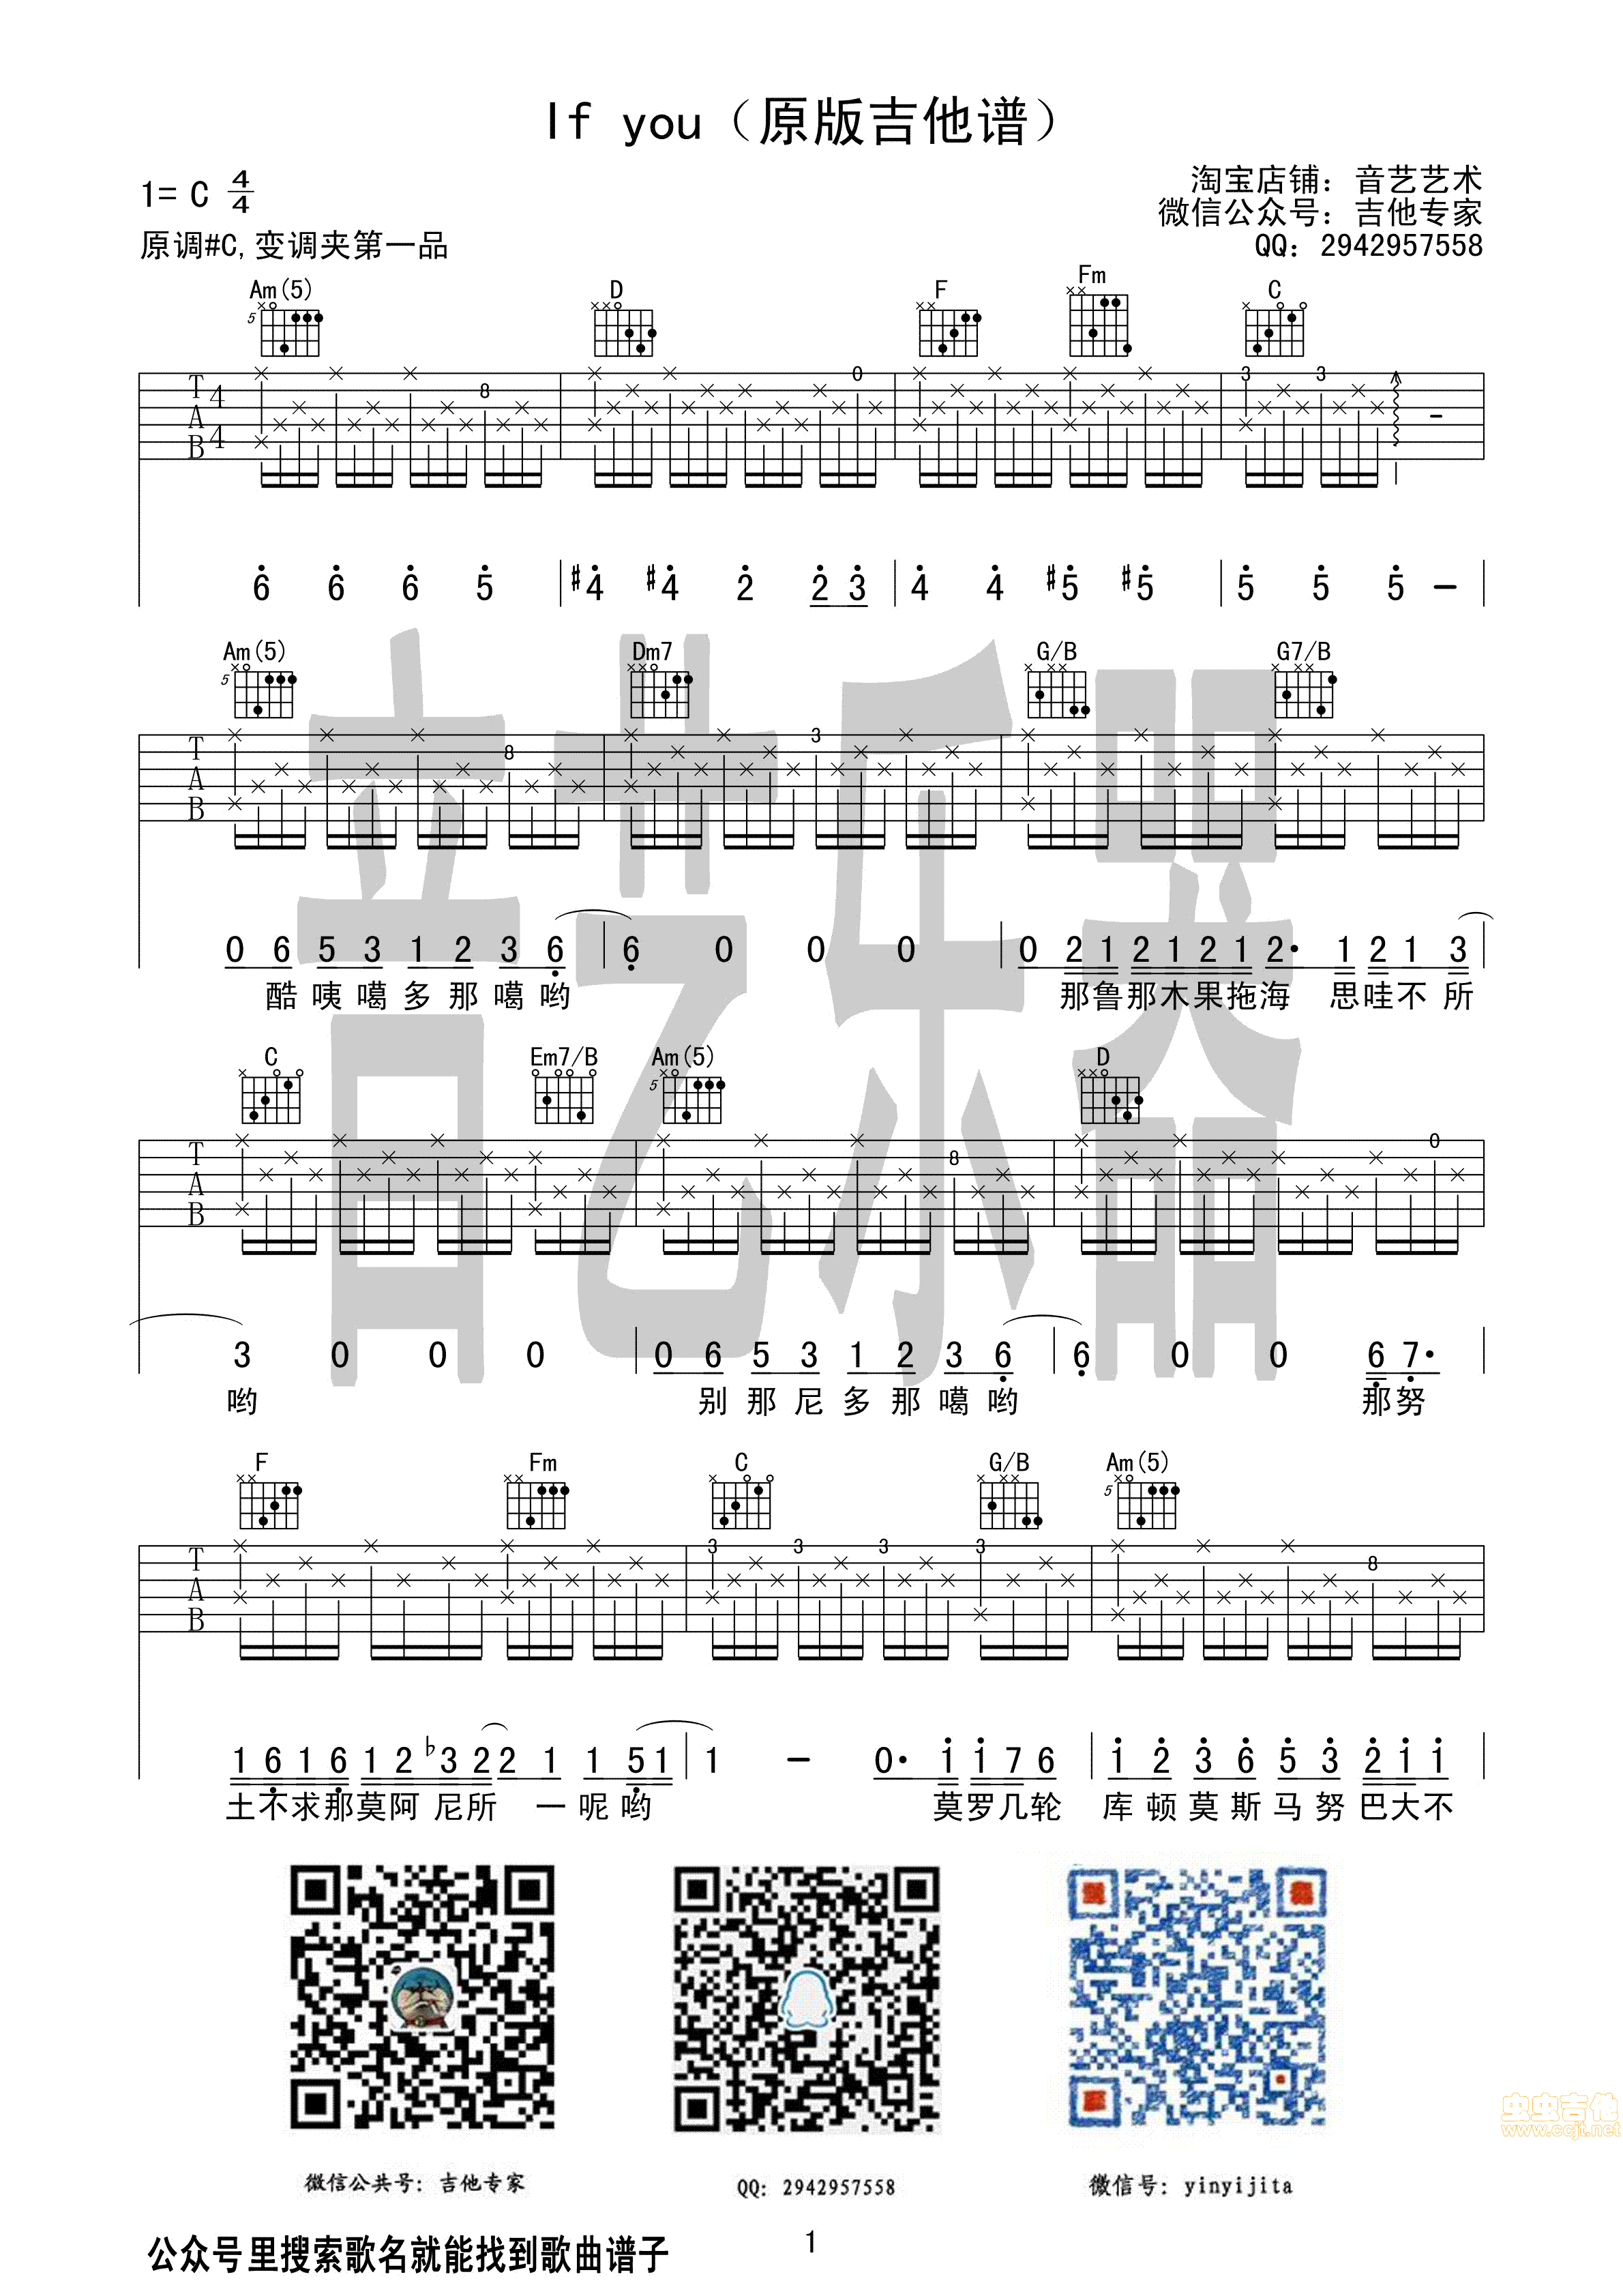 If You by Big Bang Guitar Tabs Chords Sheet Music Free | LearnGuitarsOnline.com